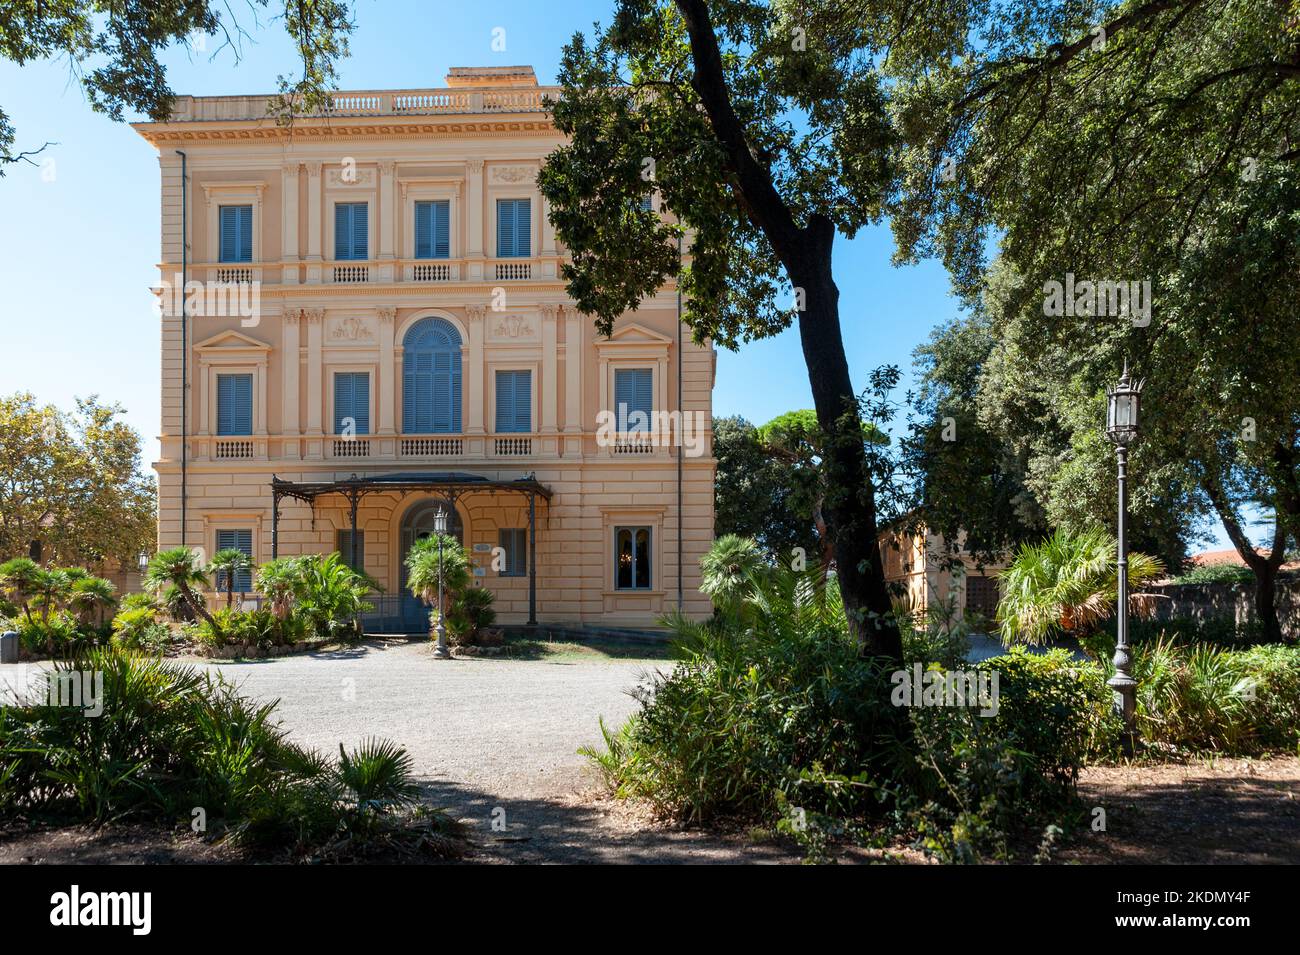 Villa Mimbelli, Giovanni Fattori Bürgermuseum. Gebäudefassade, Blick vom Park. Stockfoto